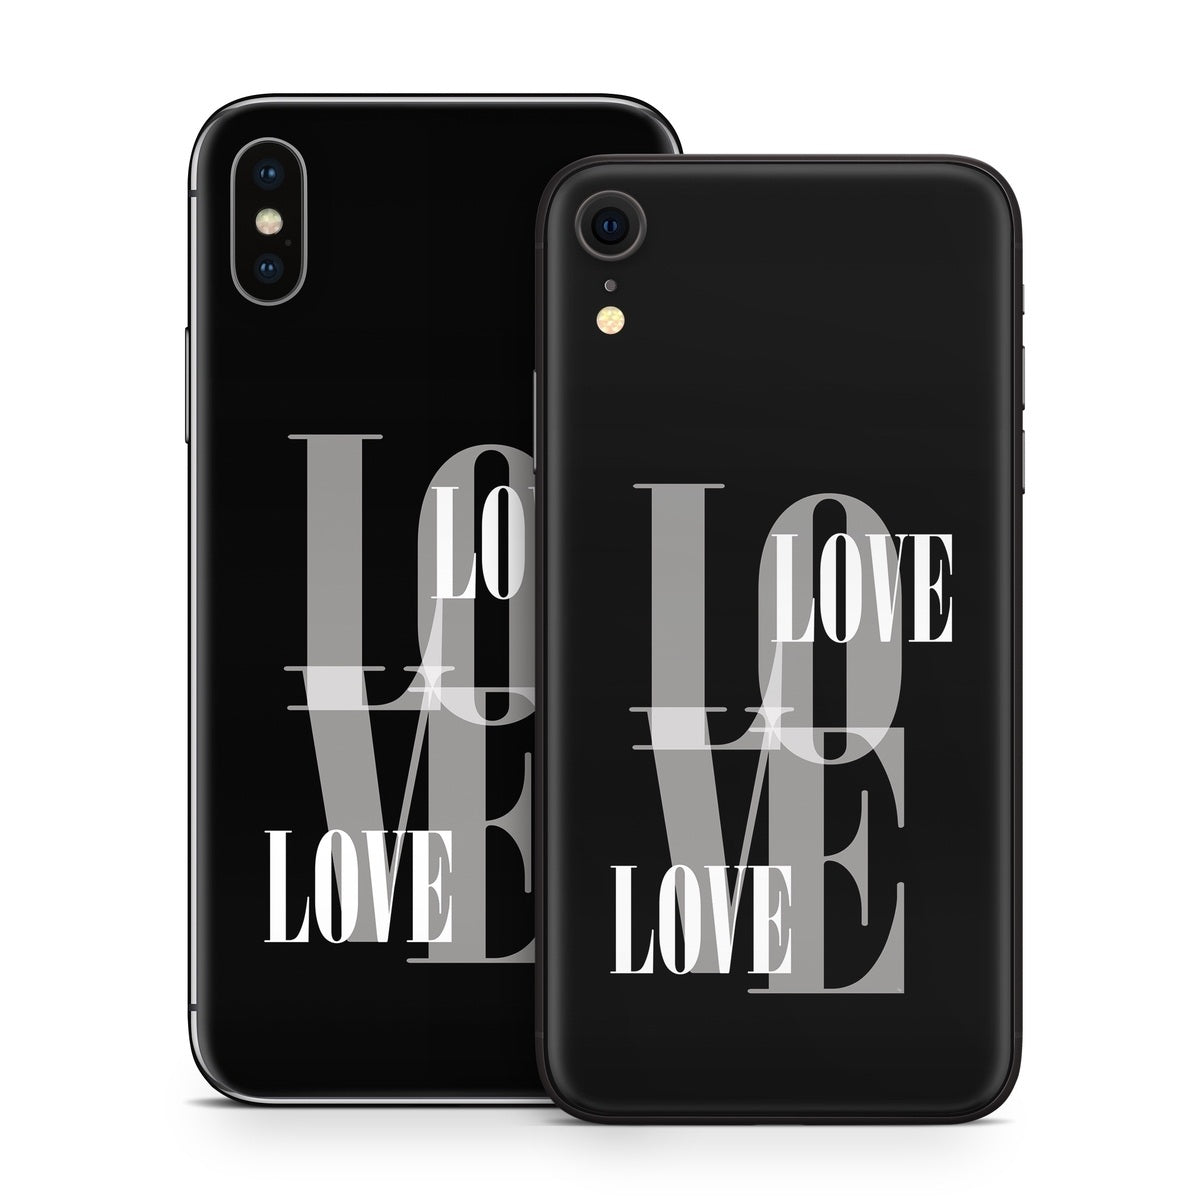 Black Love - Apple iPhone X Skin